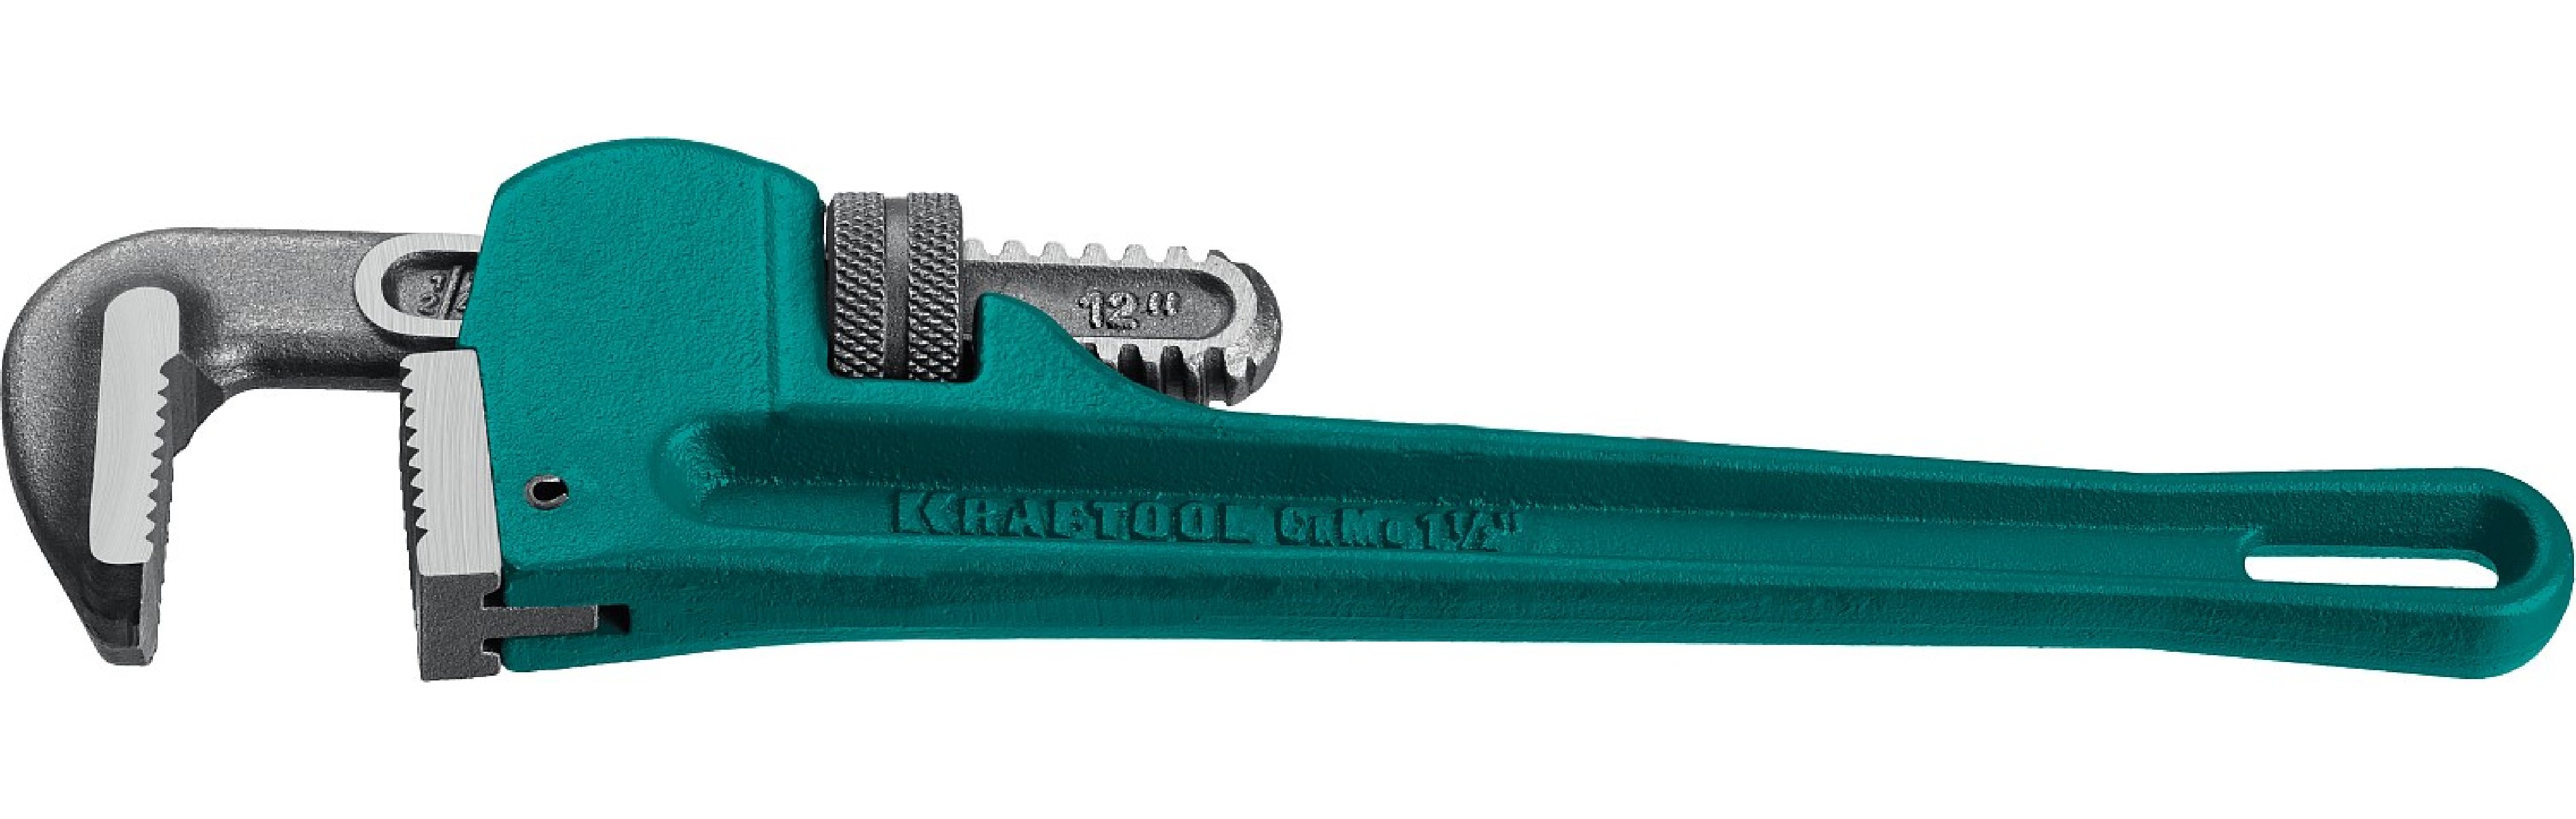 Трубный разводной ключ KRAFTOOL STILLSON 1.5 300 мм (2727-30)